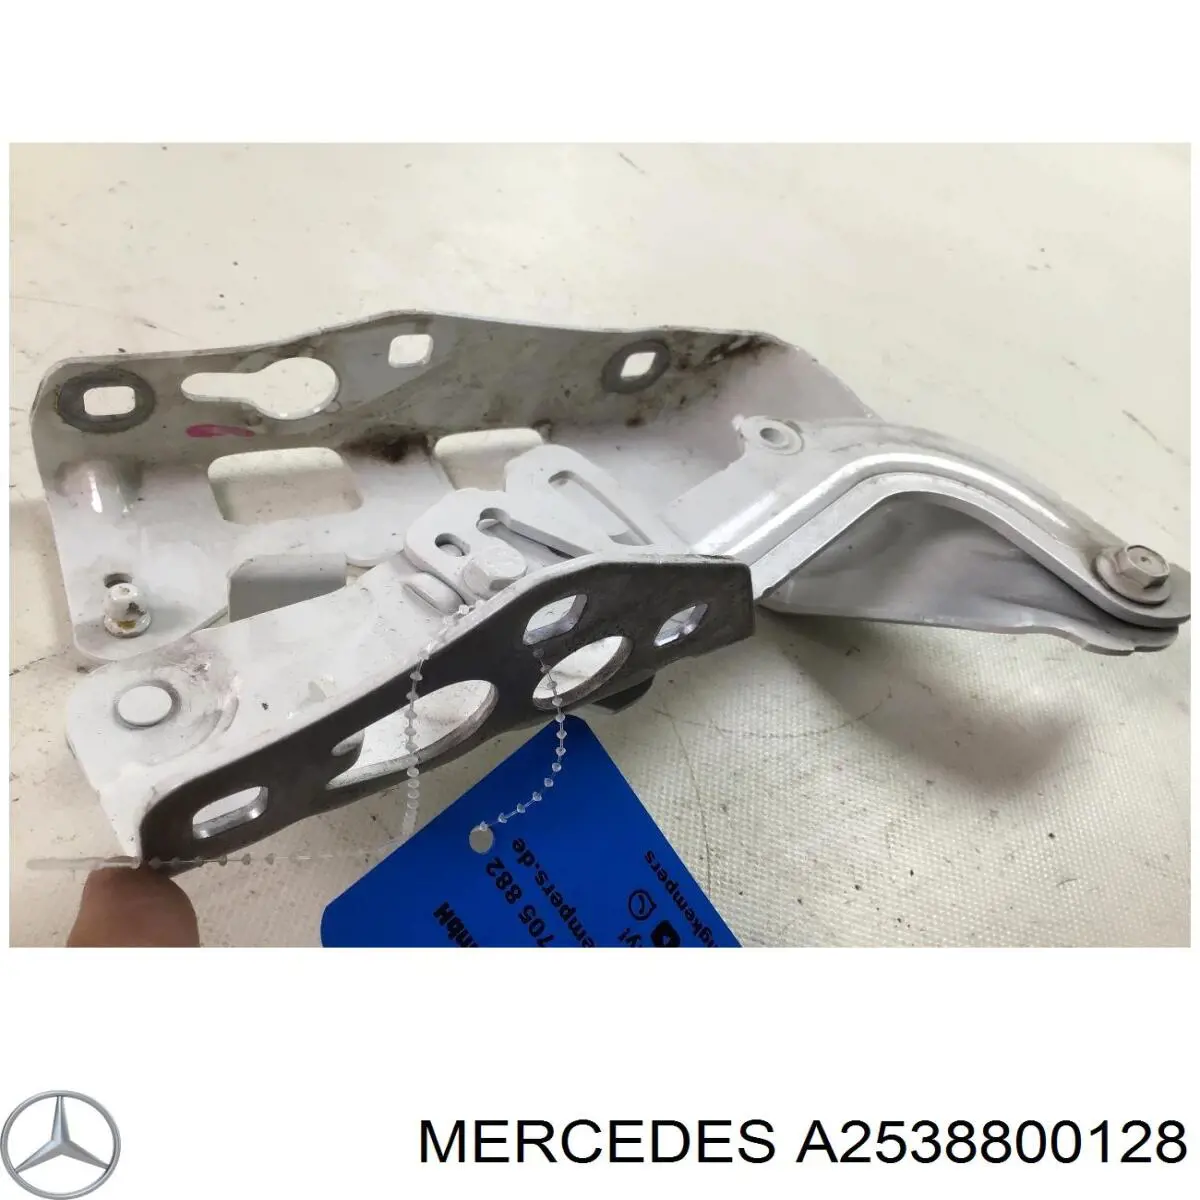 A2538800128 Mercedes